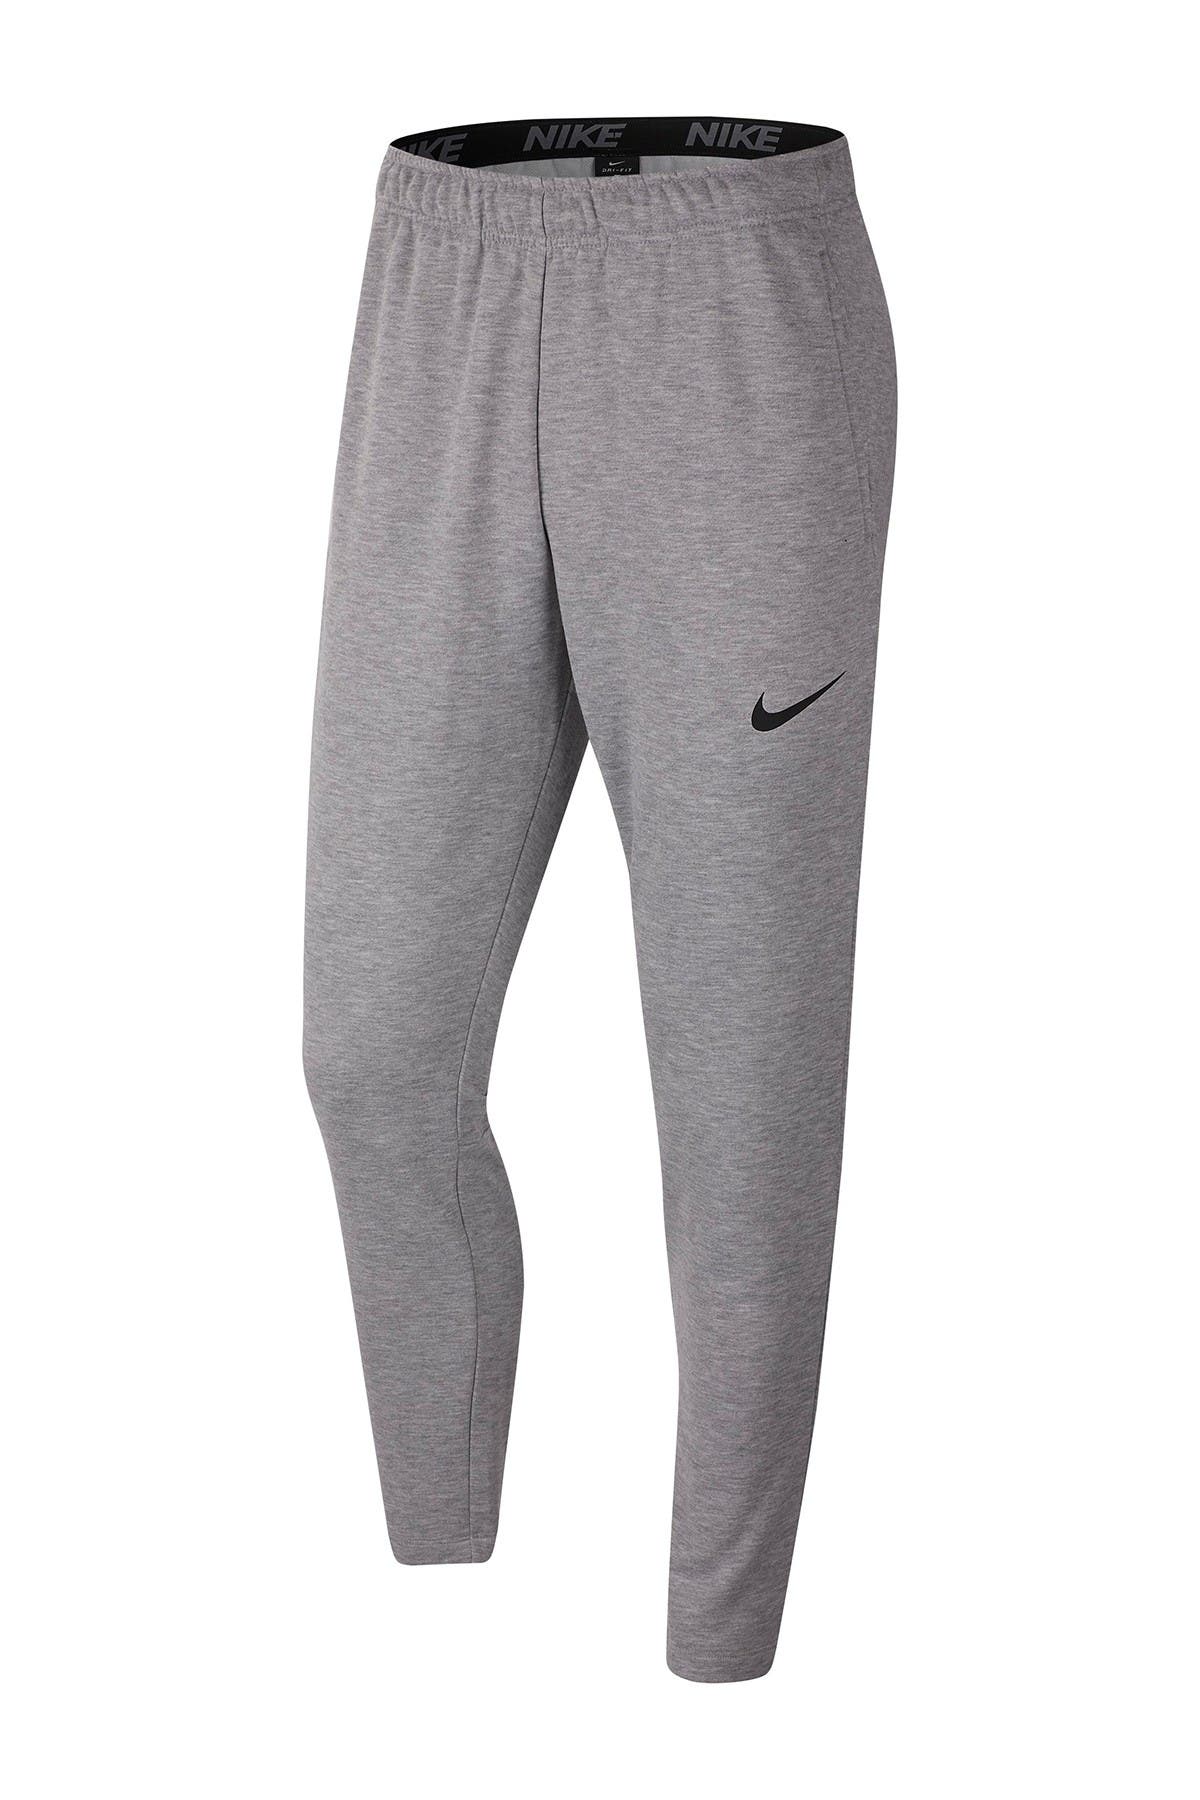 Nike | Dri-FIT Drawstring Pants 